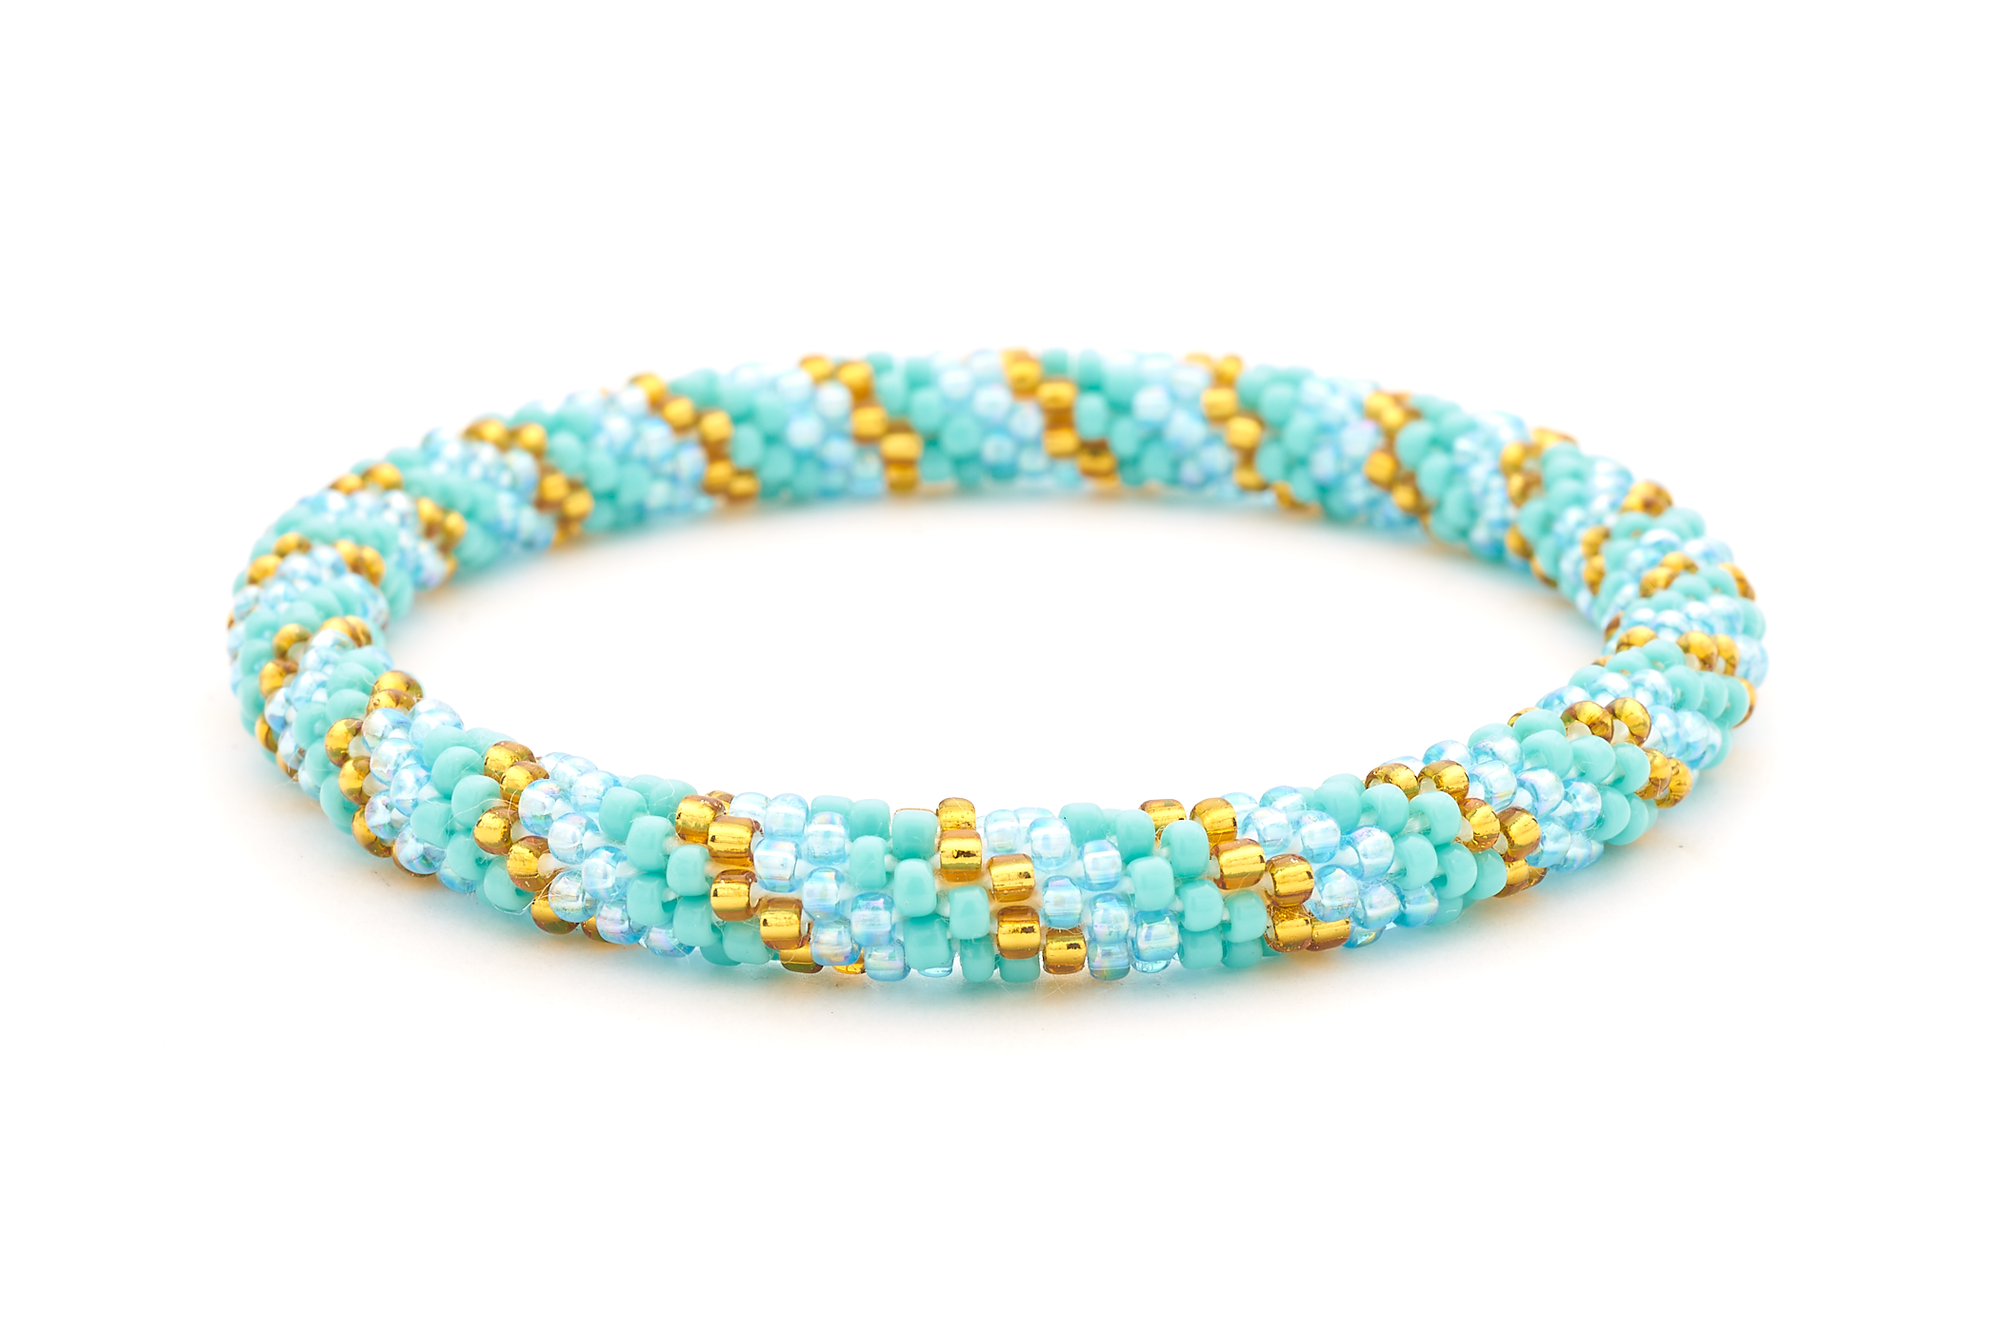 Sashka Co. Extended 8" Bracelet Turquoise / Iridescent Light Blue / Gold Turquoise Tides Bracelet - Extended 8"